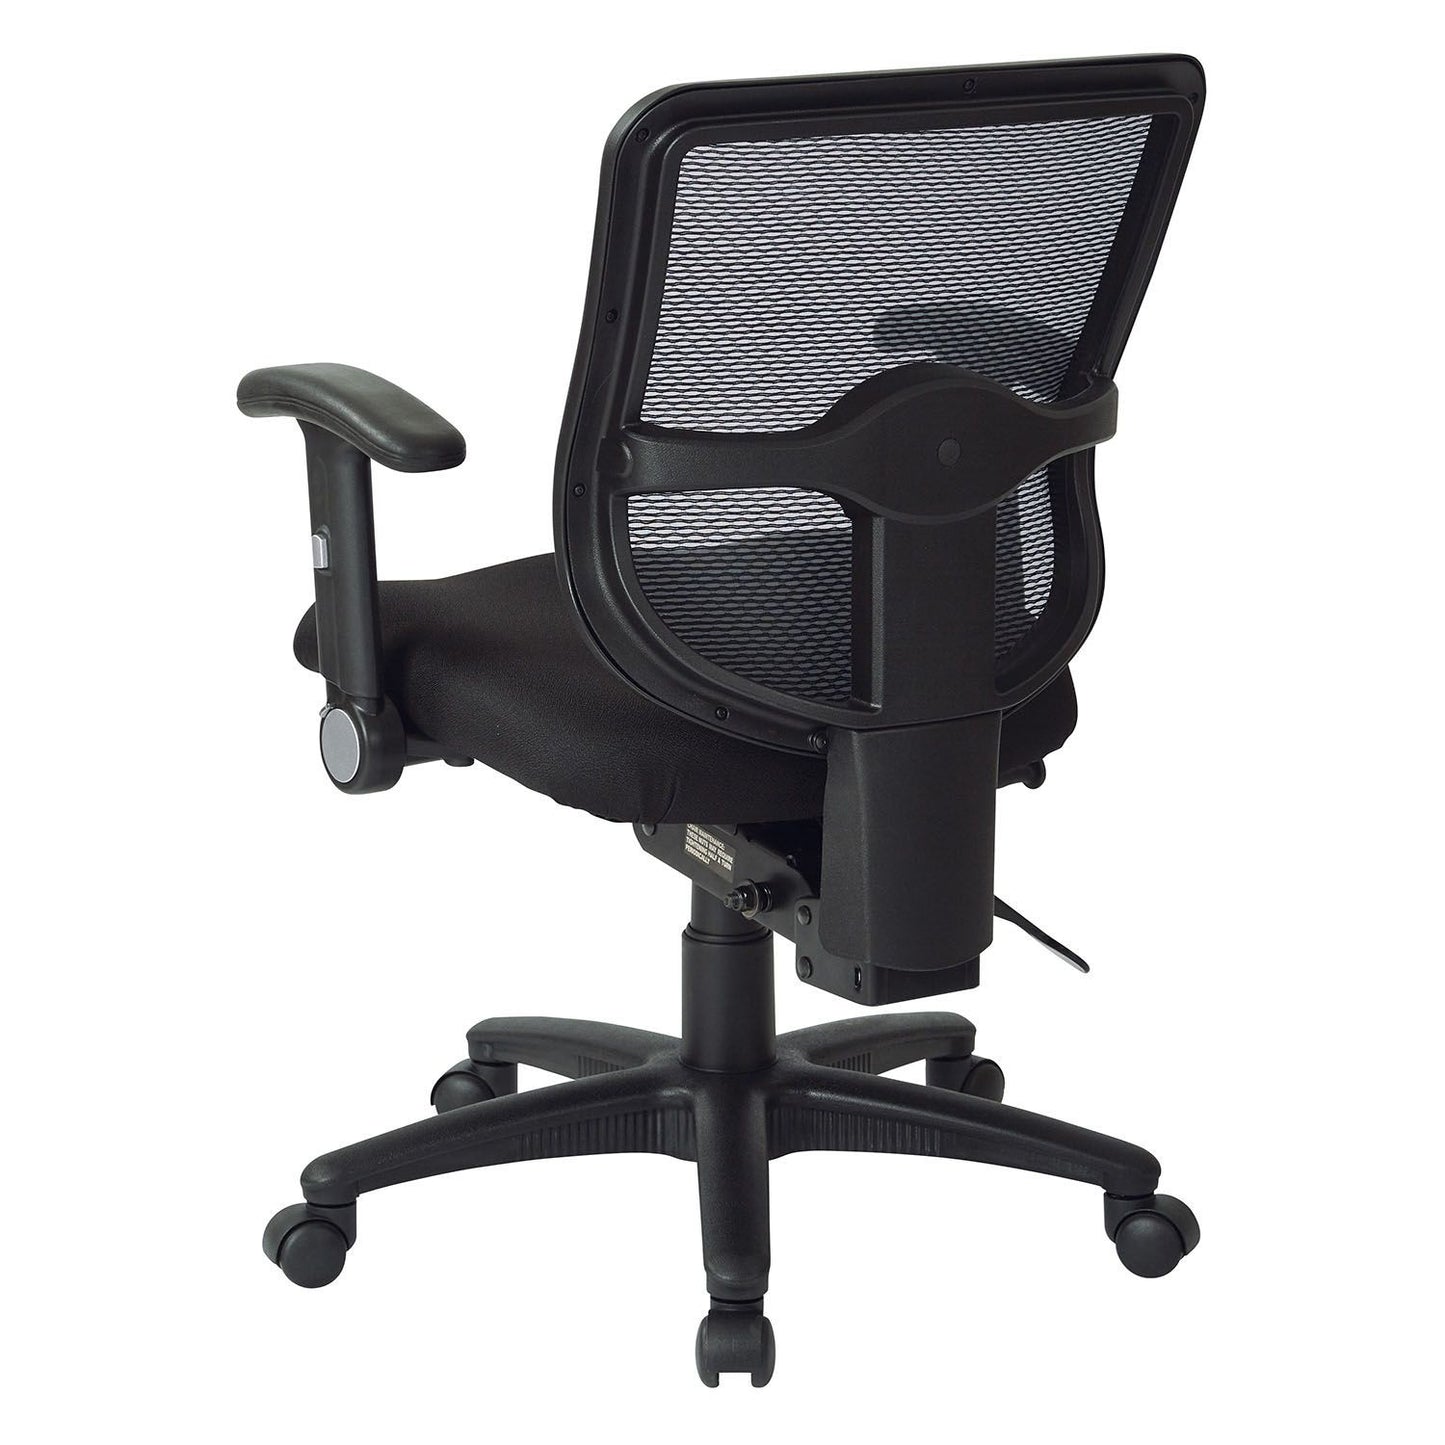 WorkSmart Multi-Function Office Chair, Black